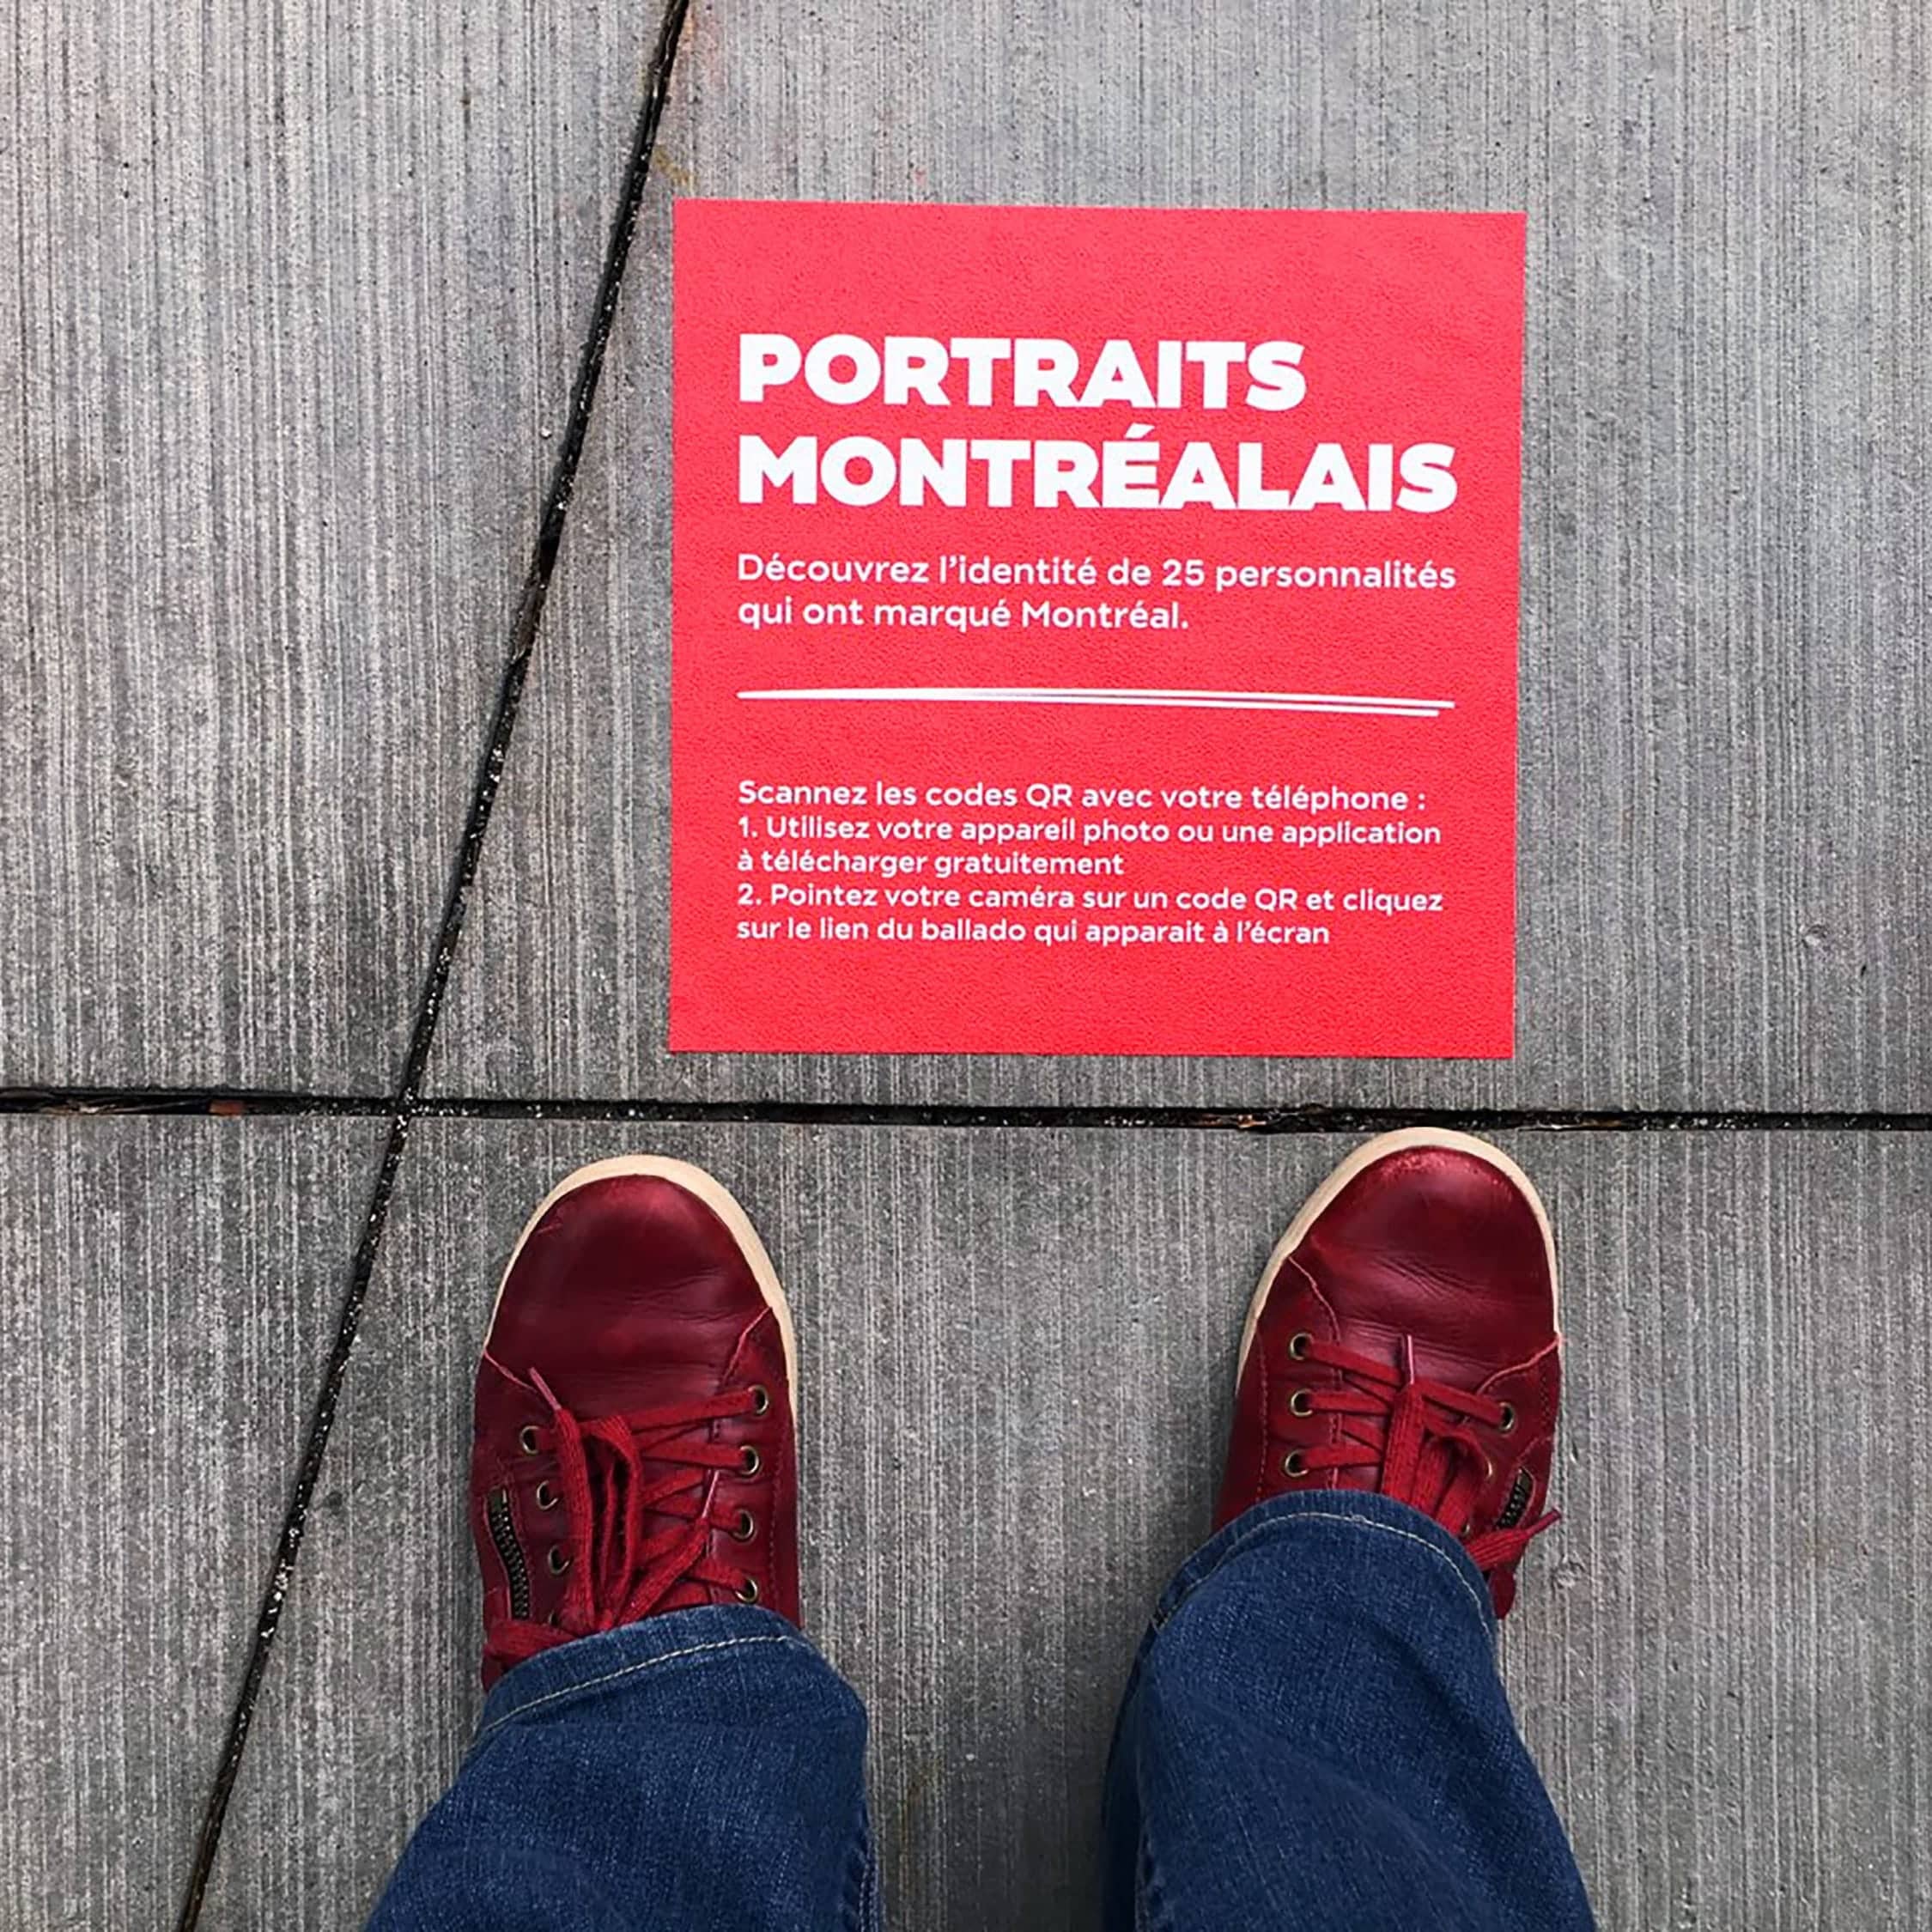 The Montreal Portraits exhibition